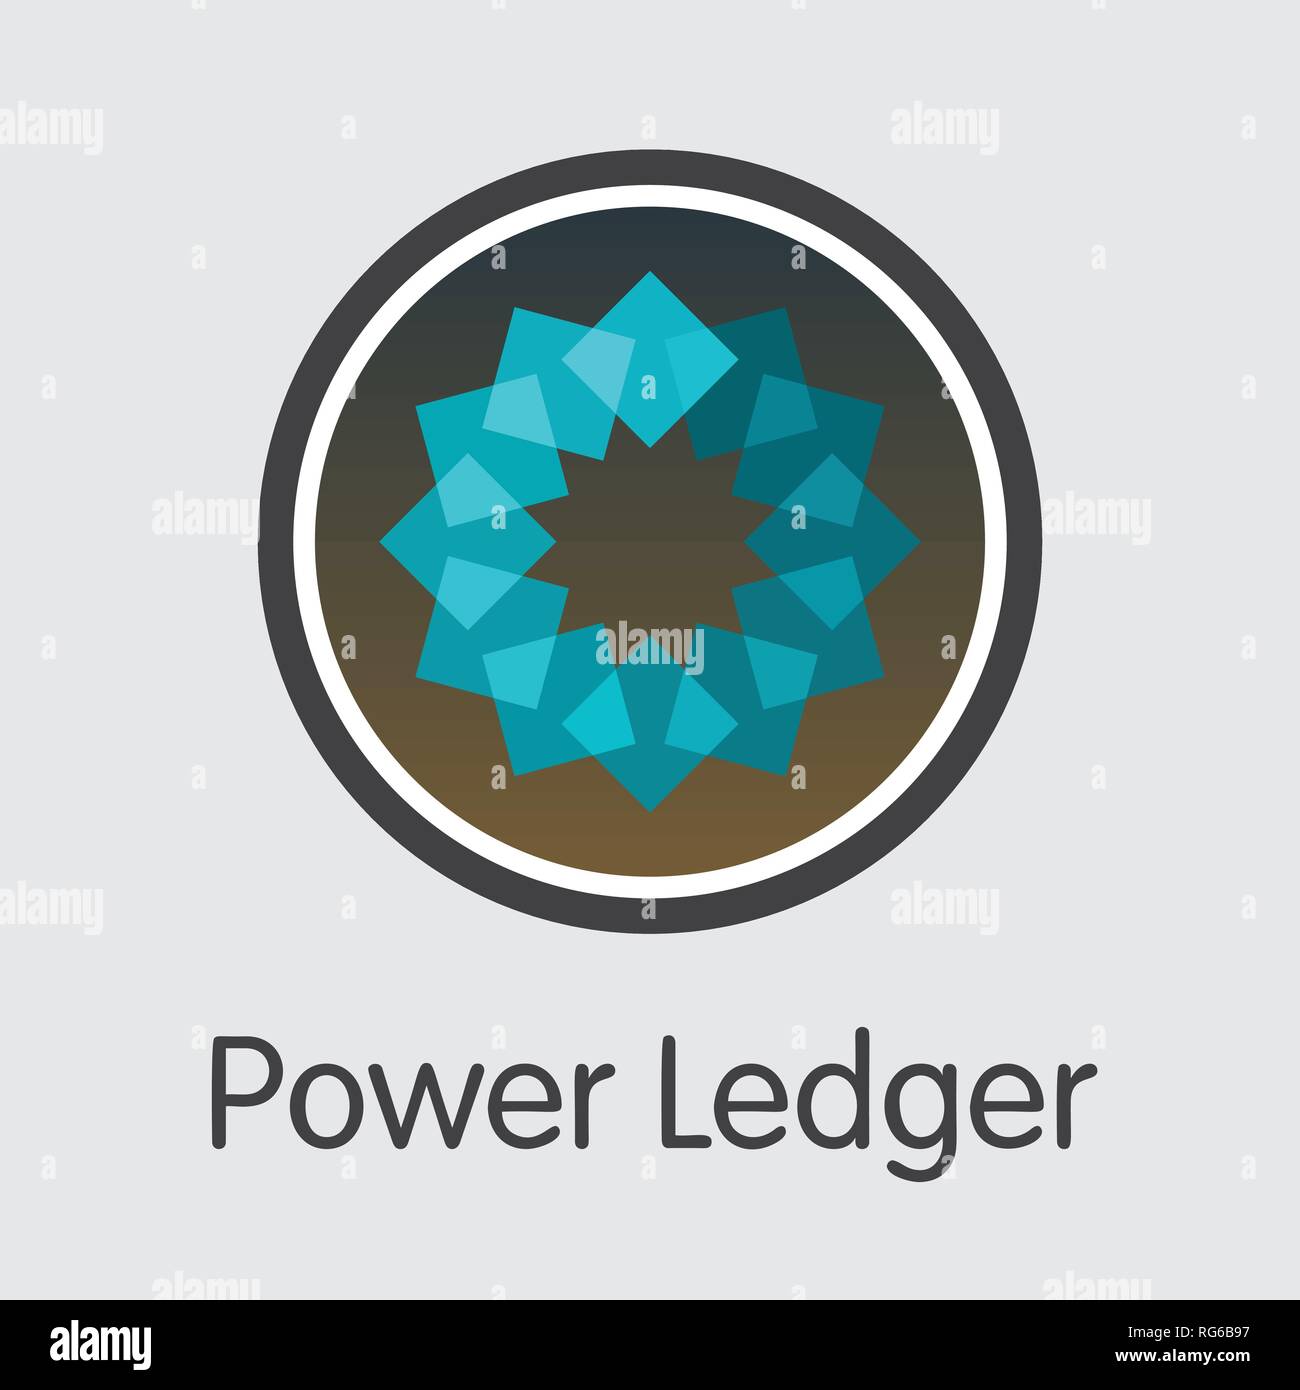 POWR - Power Ledger. The Icon of Money or Market Emblem. Stock Vector